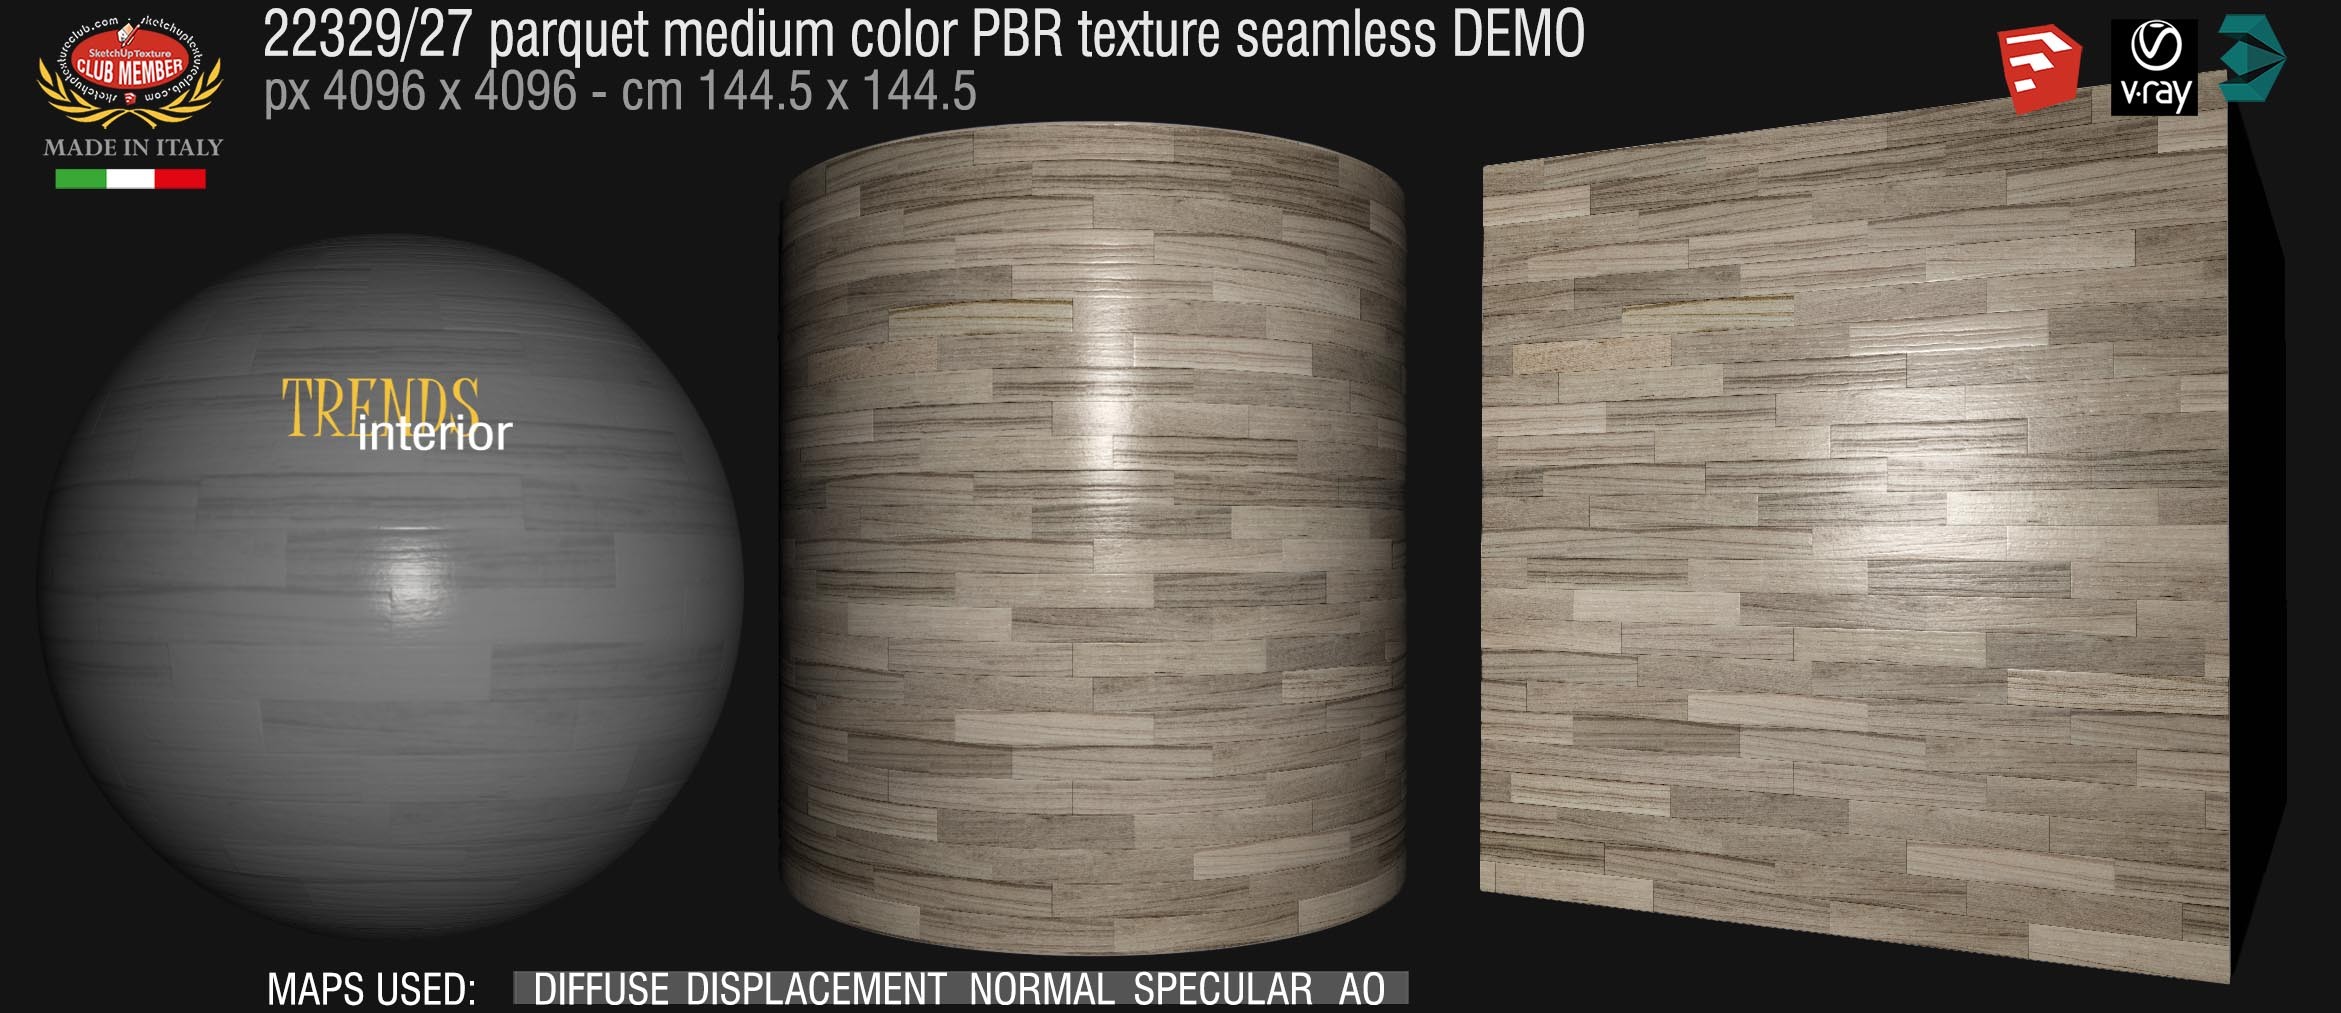 22329_27 parquet medium color PBR texture seamless DEMO